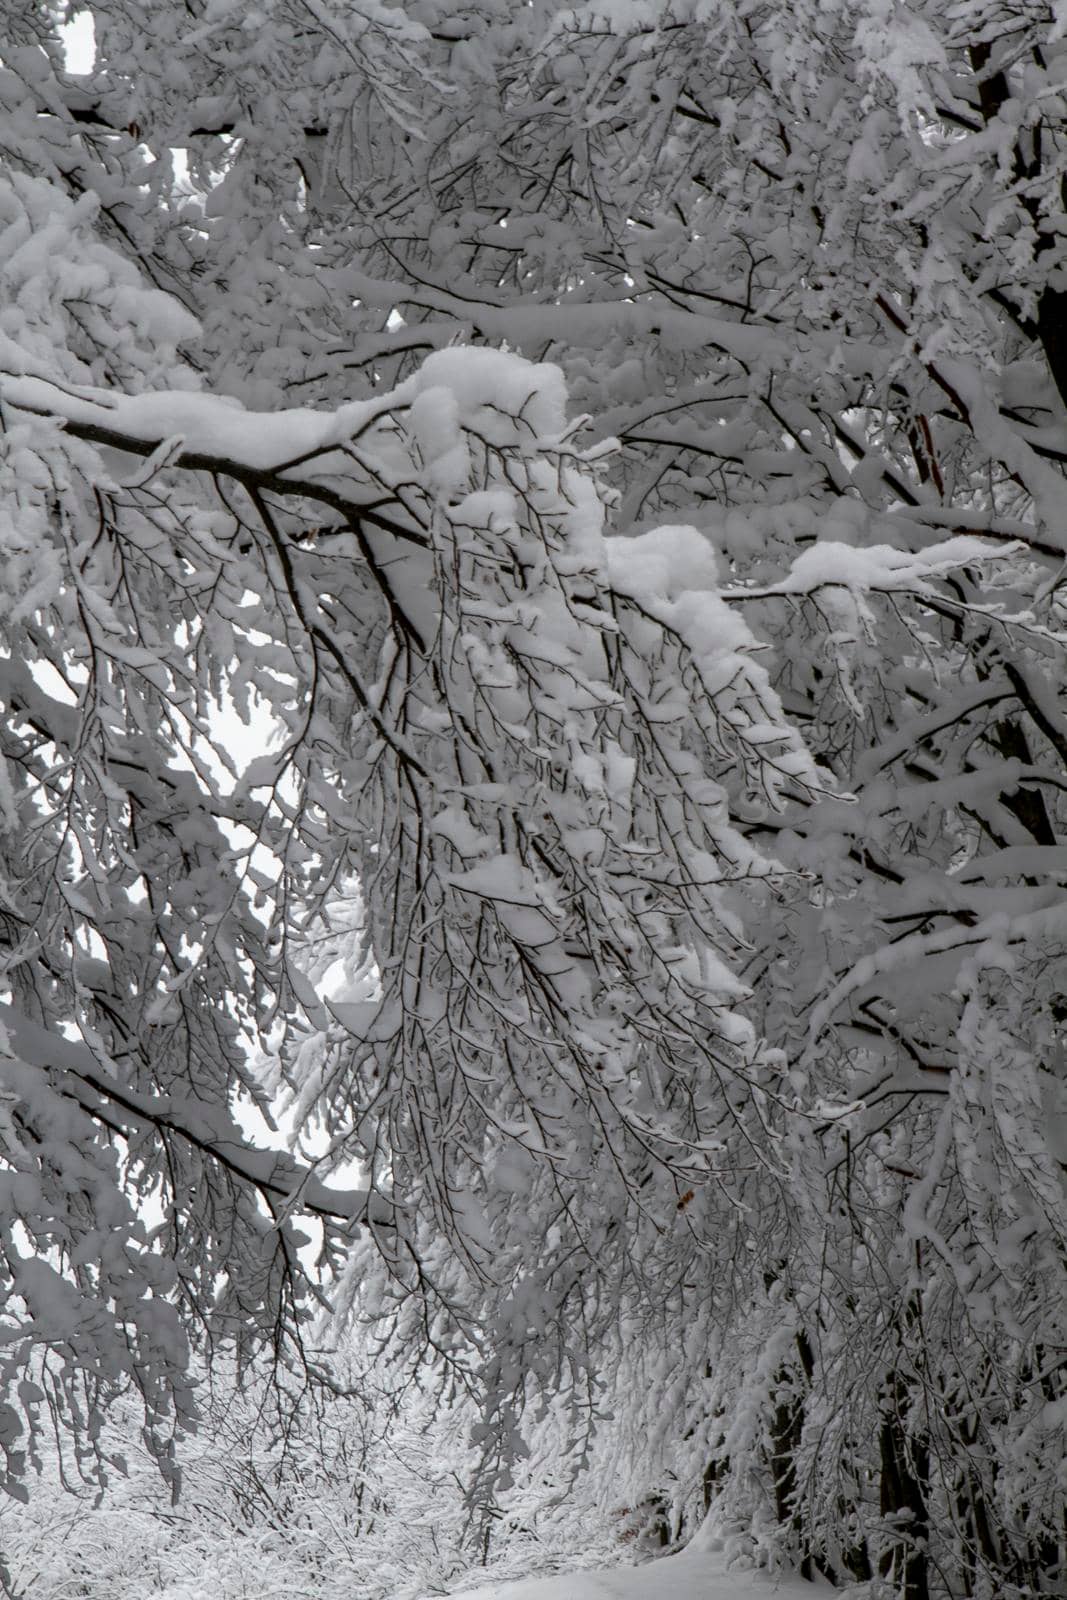 snowy landscape with trees in Schia Monte Caio Tizzano Parma. High quality photo